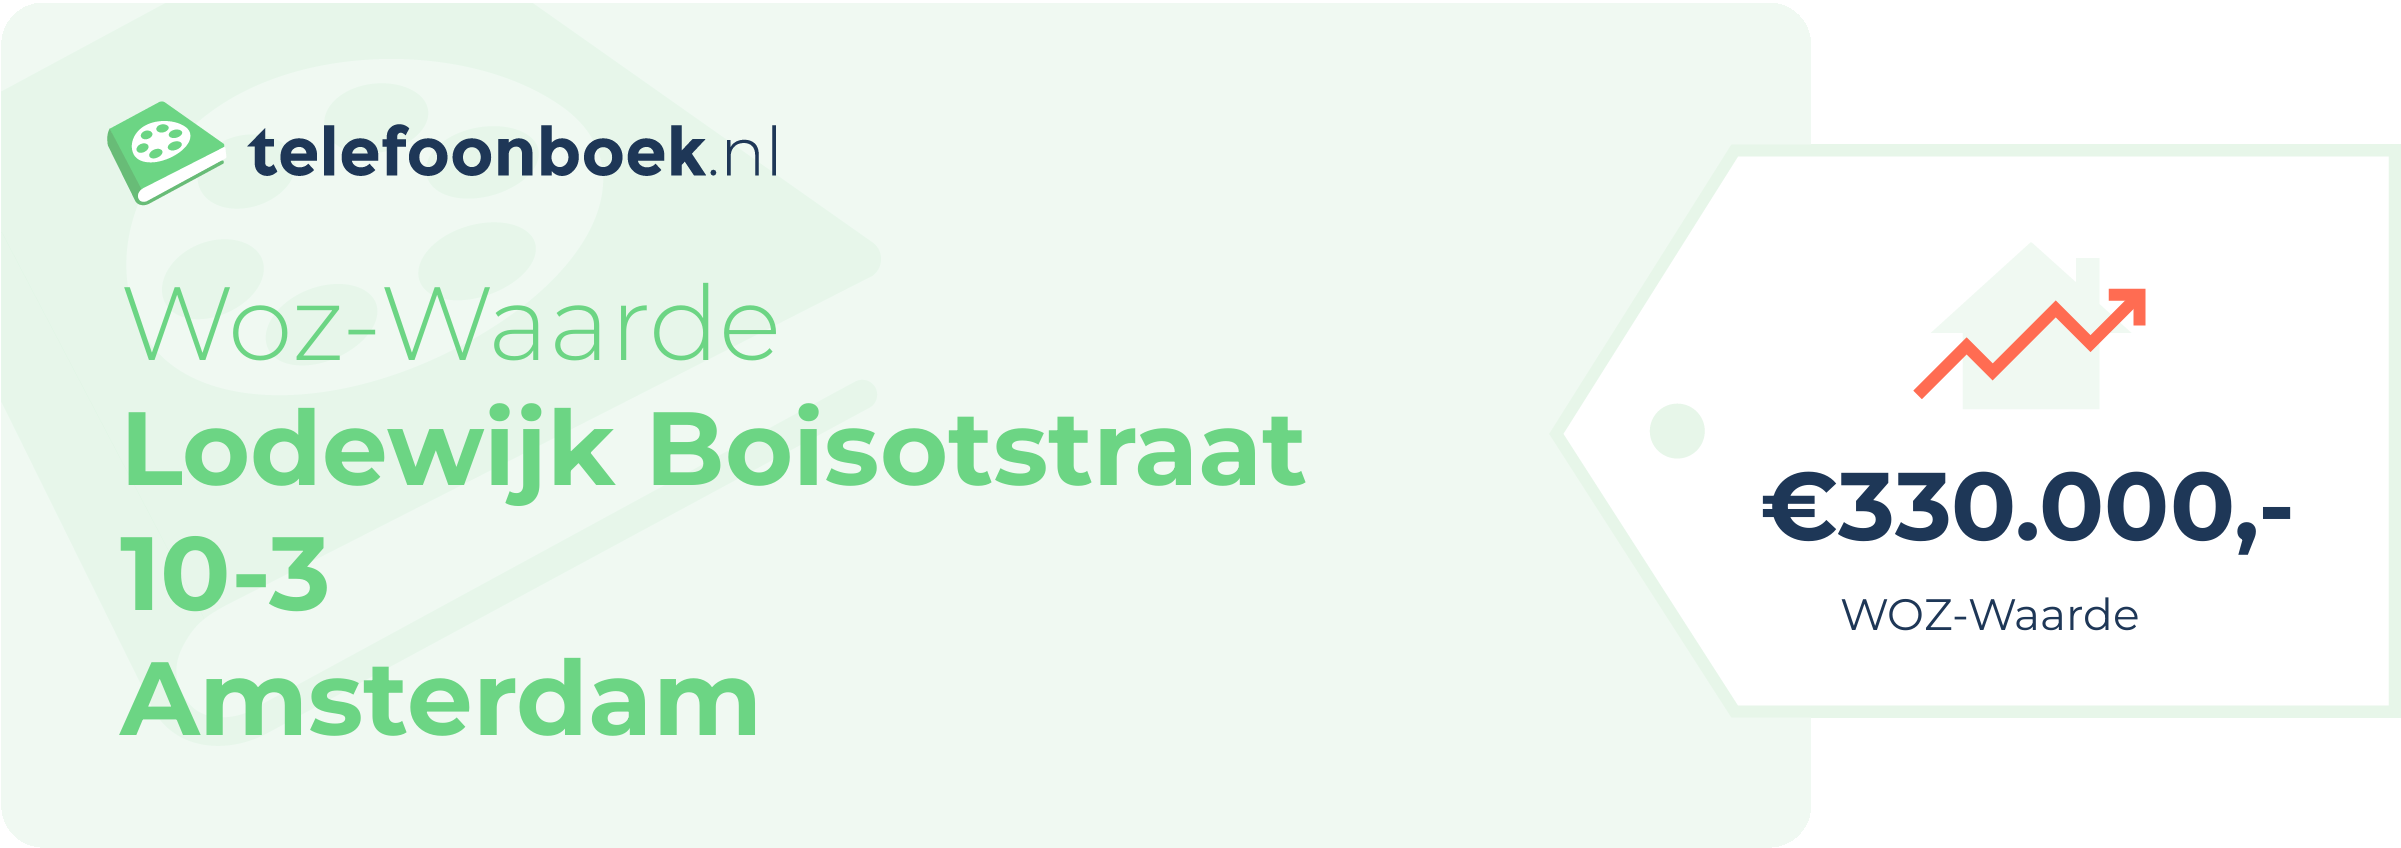 WOZ-waarde Lodewijk Boisotstraat 10-3 Amsterdam